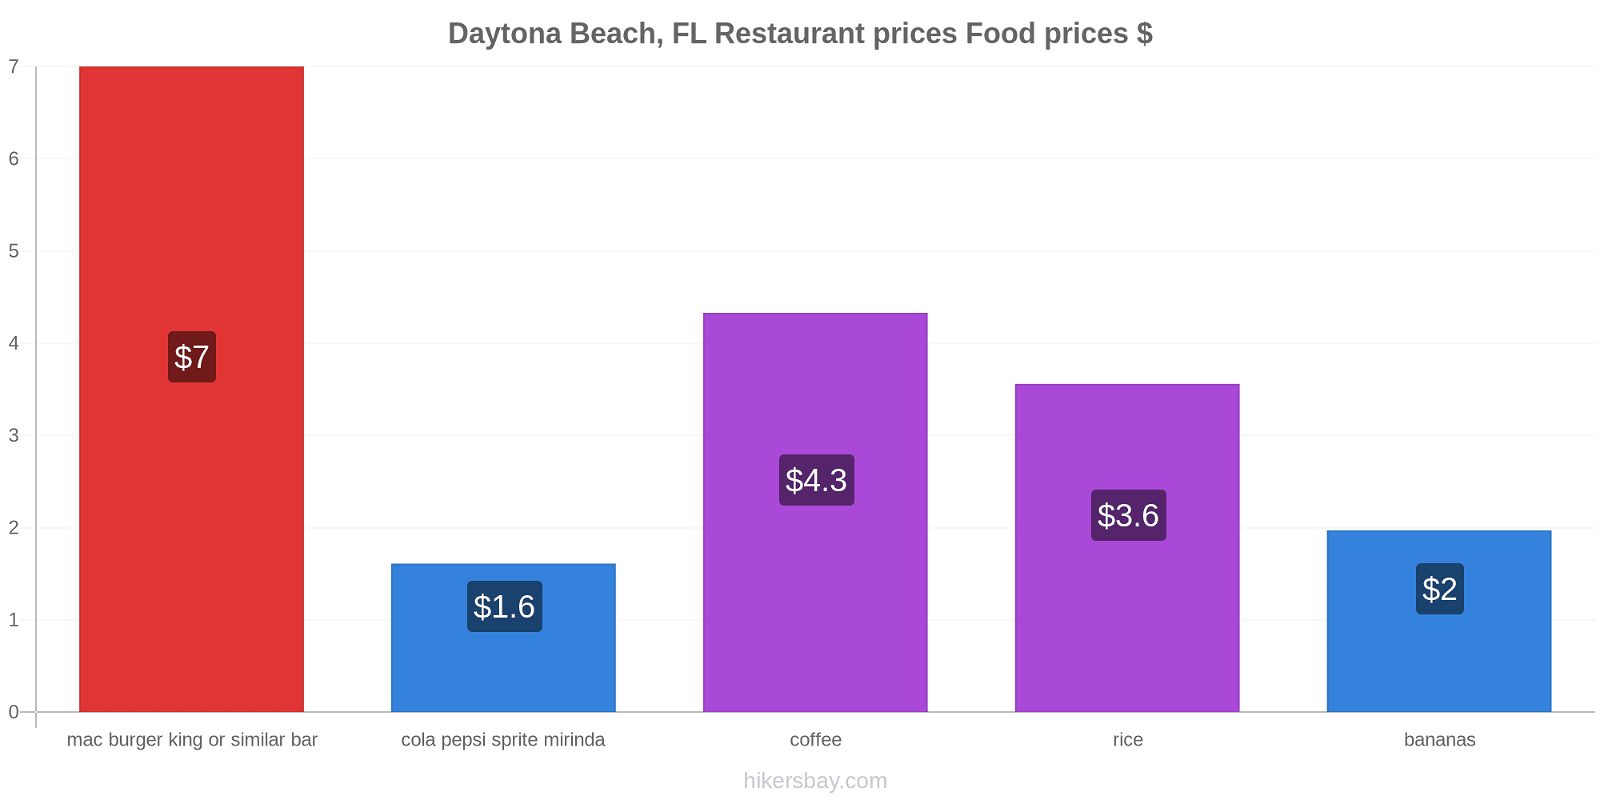 Daytona Beach, FL price changes hikersbay.com